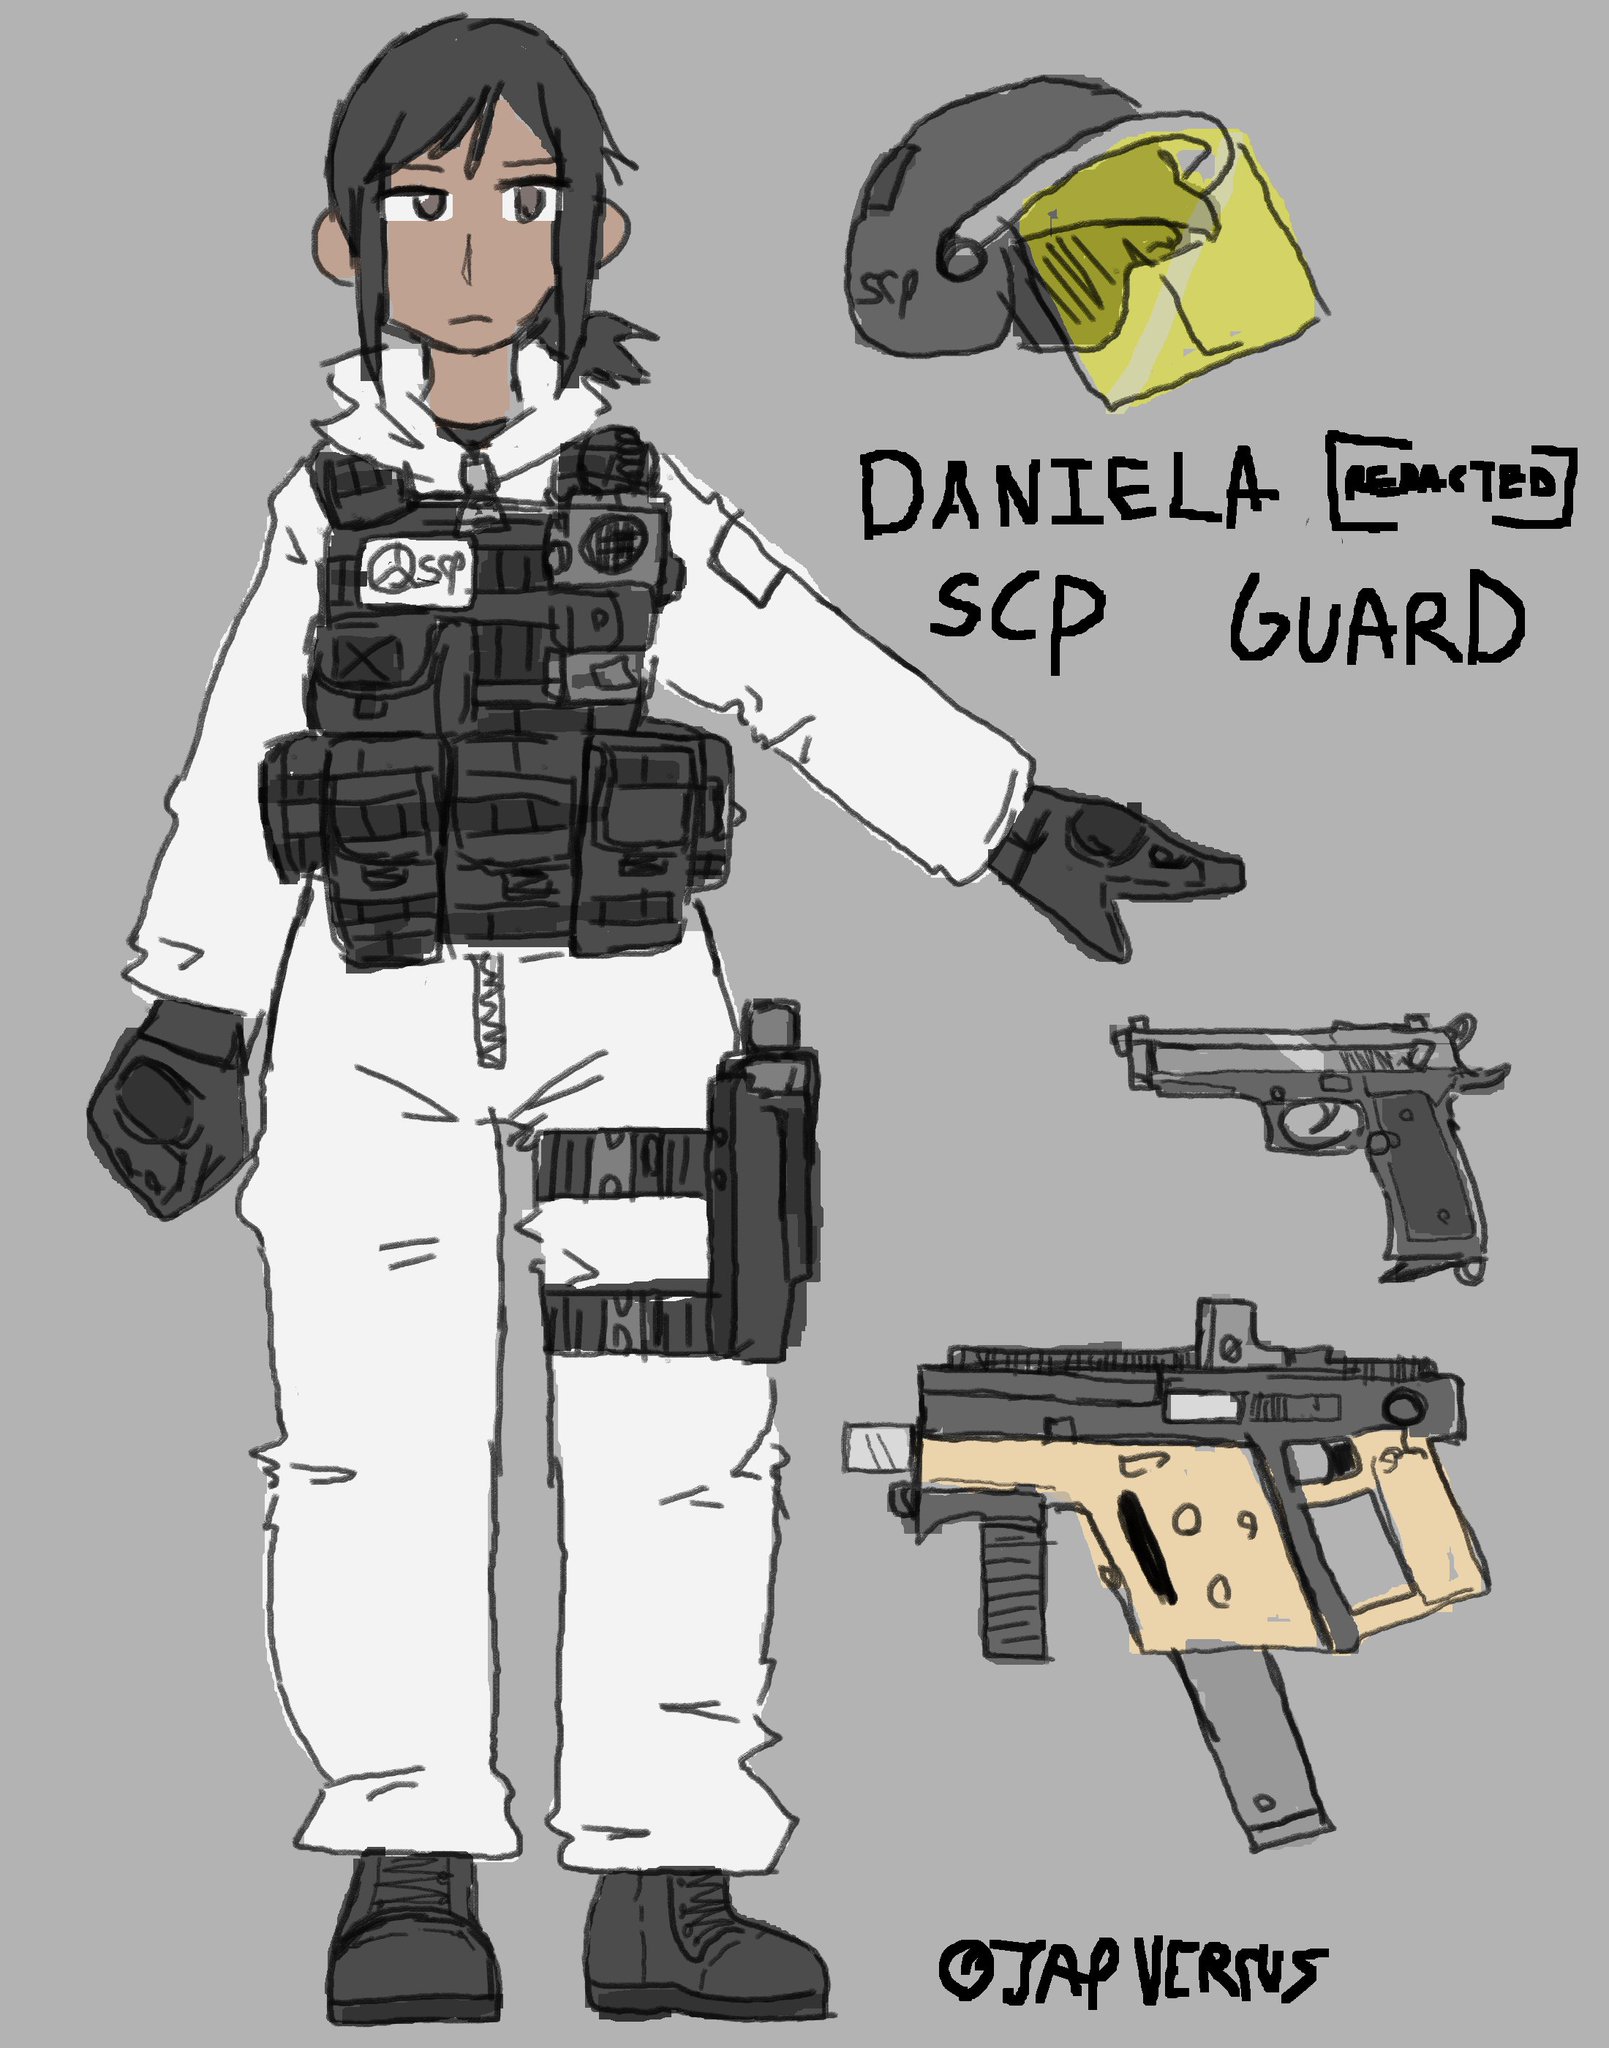 Scp Guard Outfit - scp guard uniform roblox